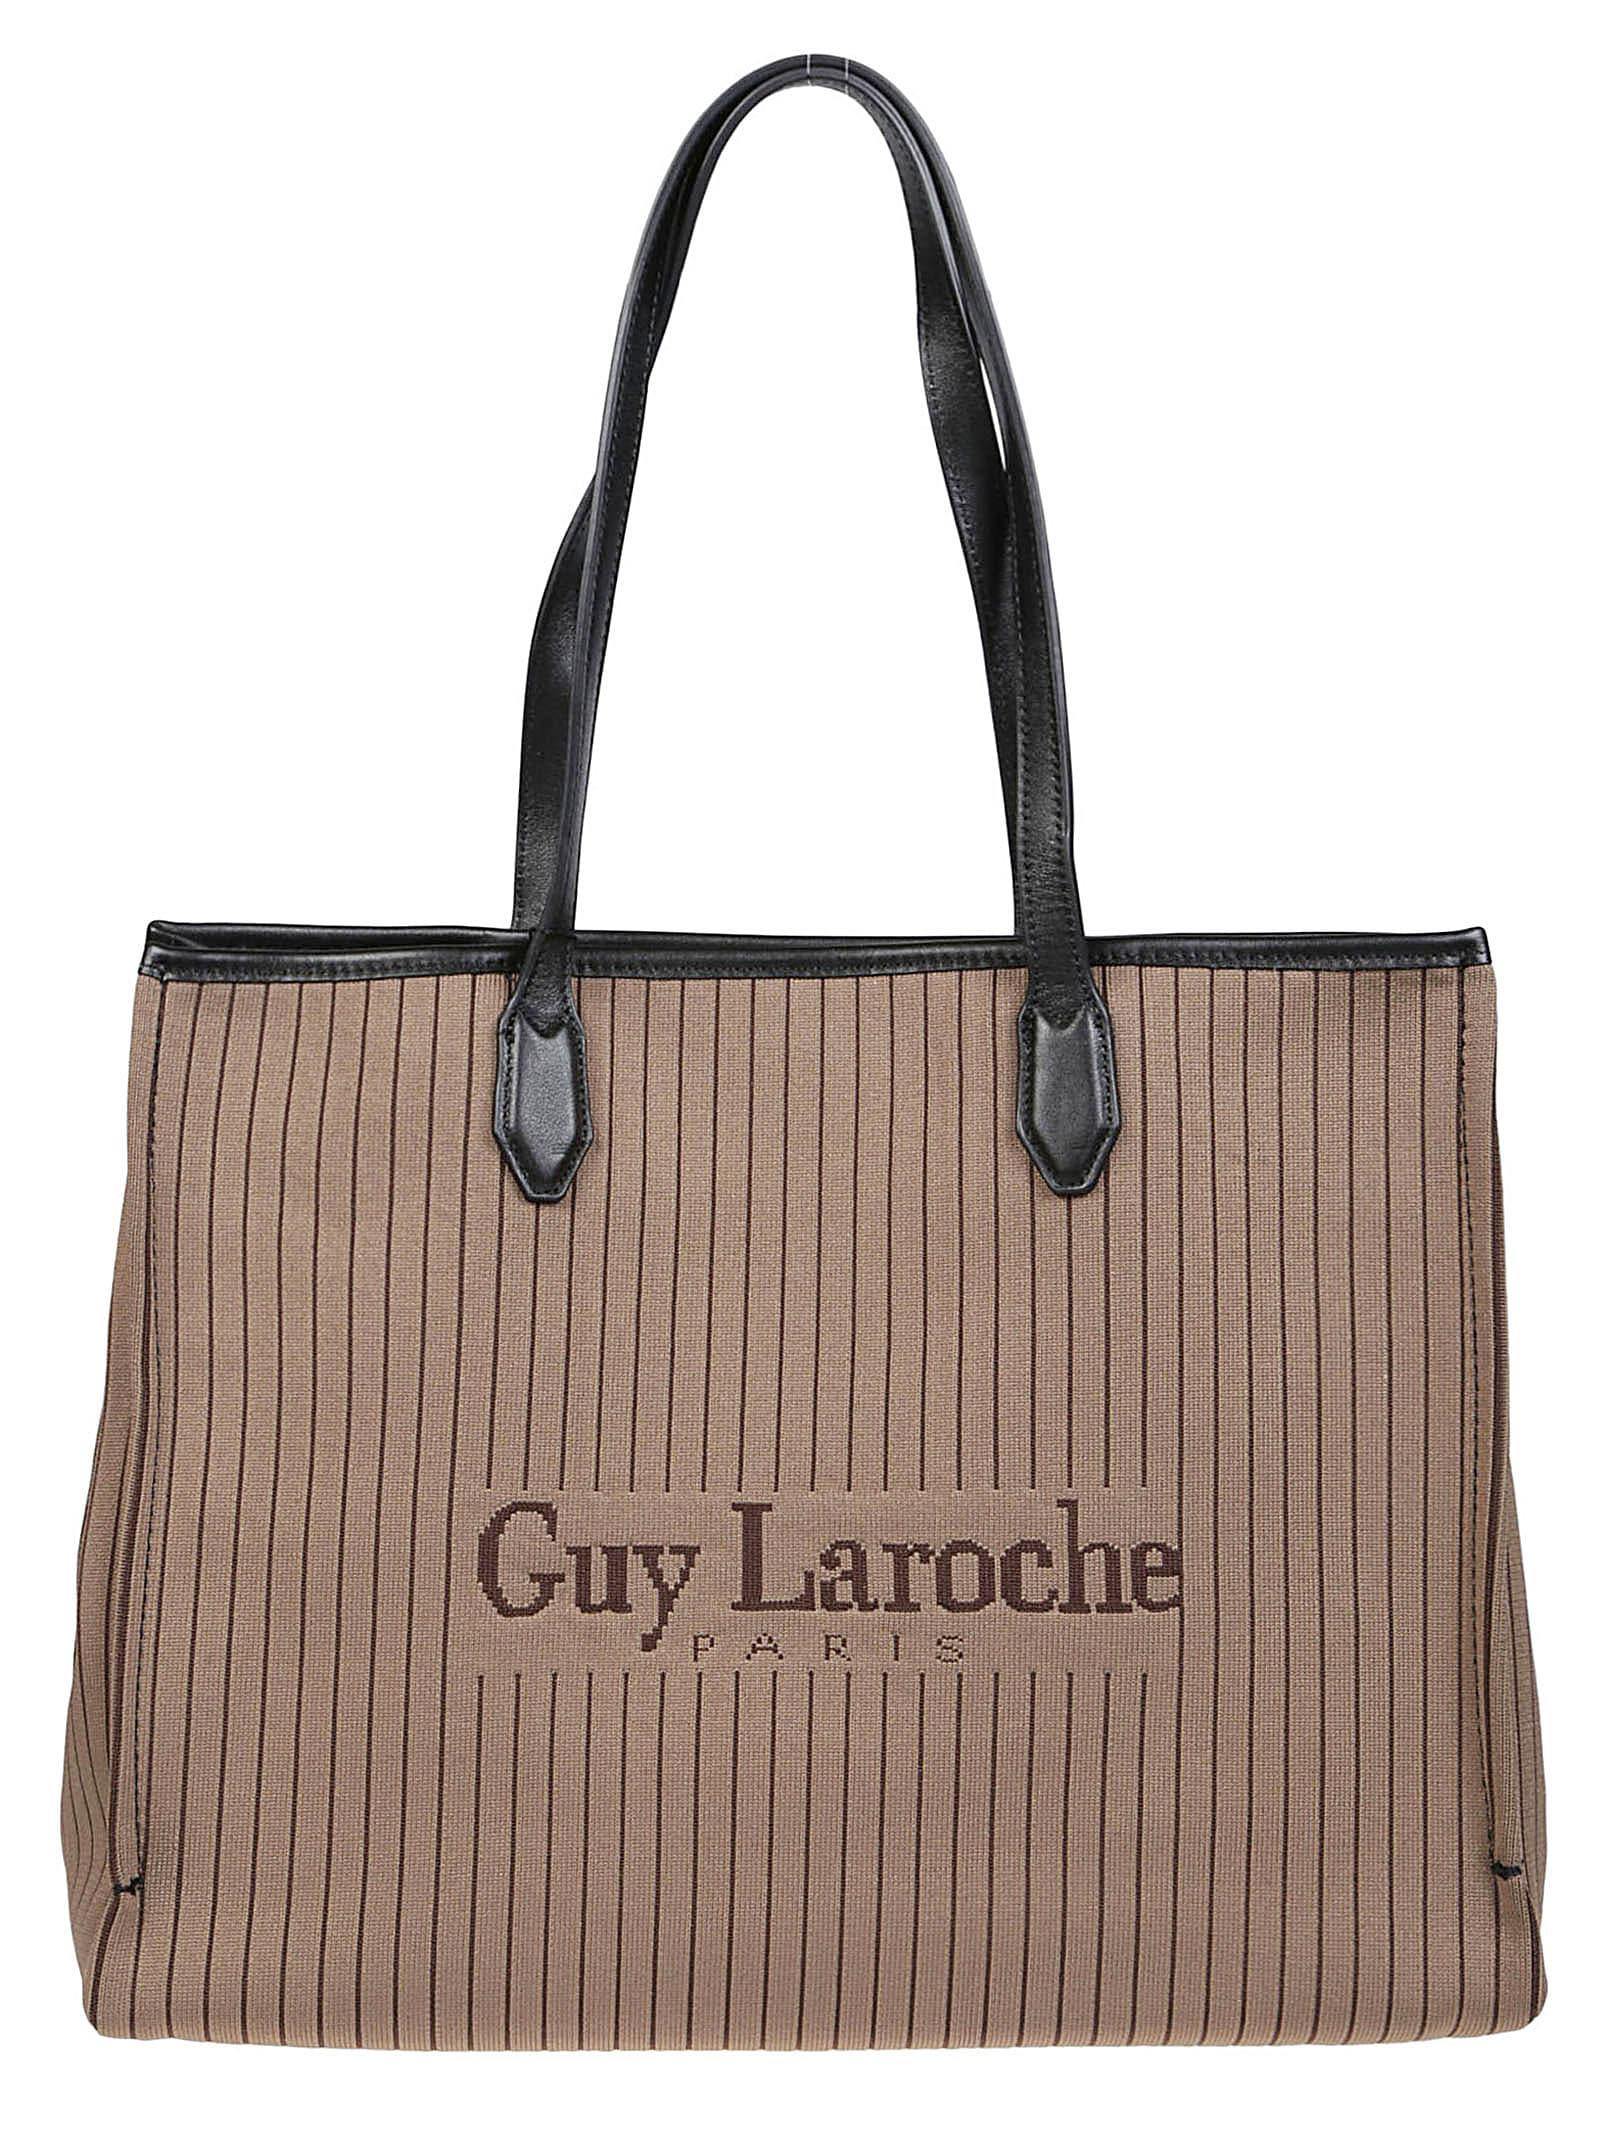 Guy Laroche Small Tote Bag in Brown